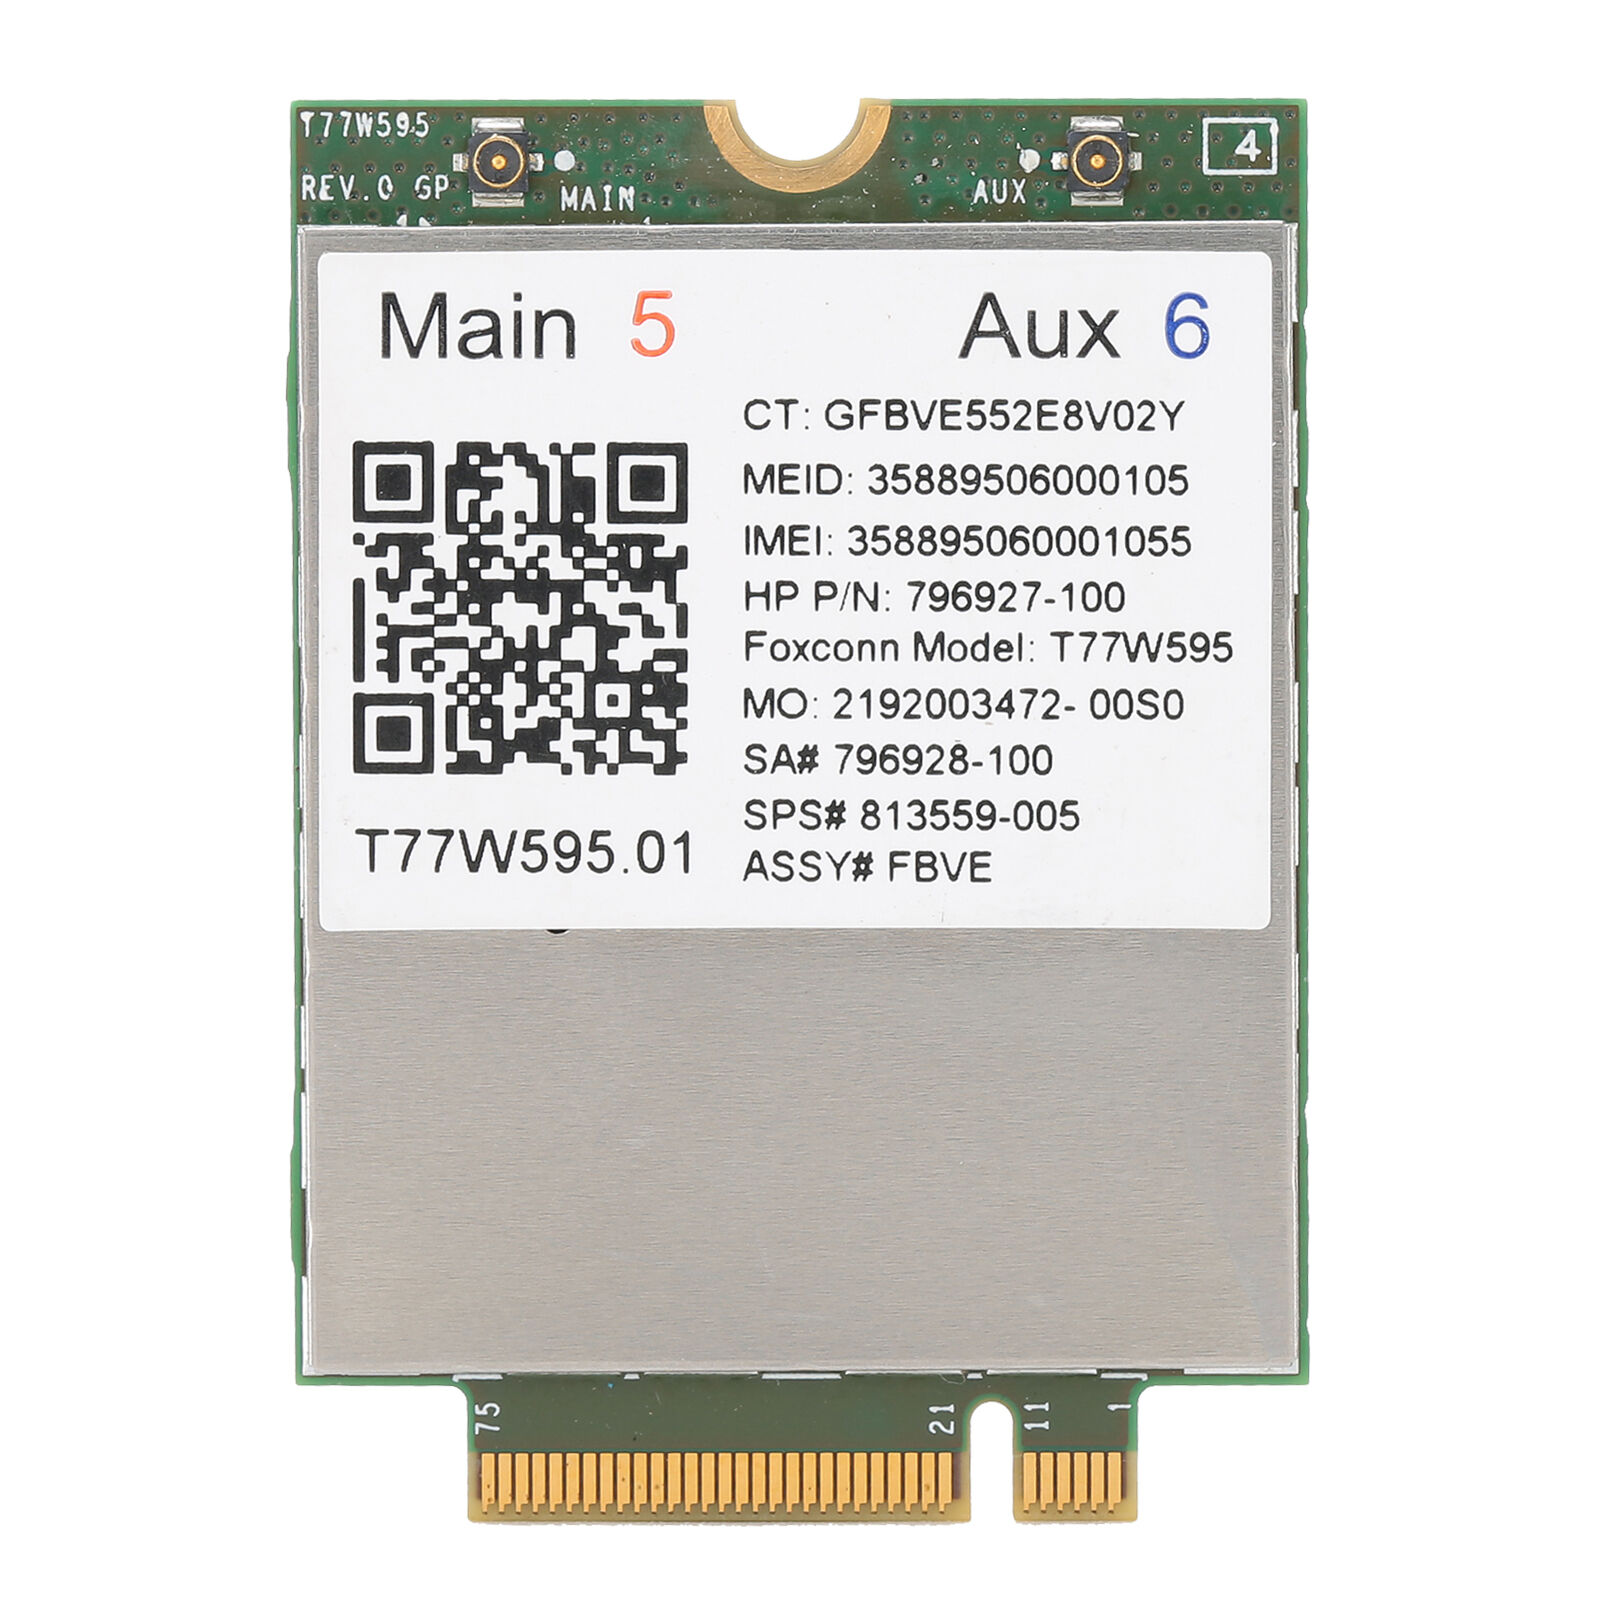 Modulator Demodulator For LT 4120 Snapdragon X5 4G LTE WWAN M.2 Modem Mod GH BEA